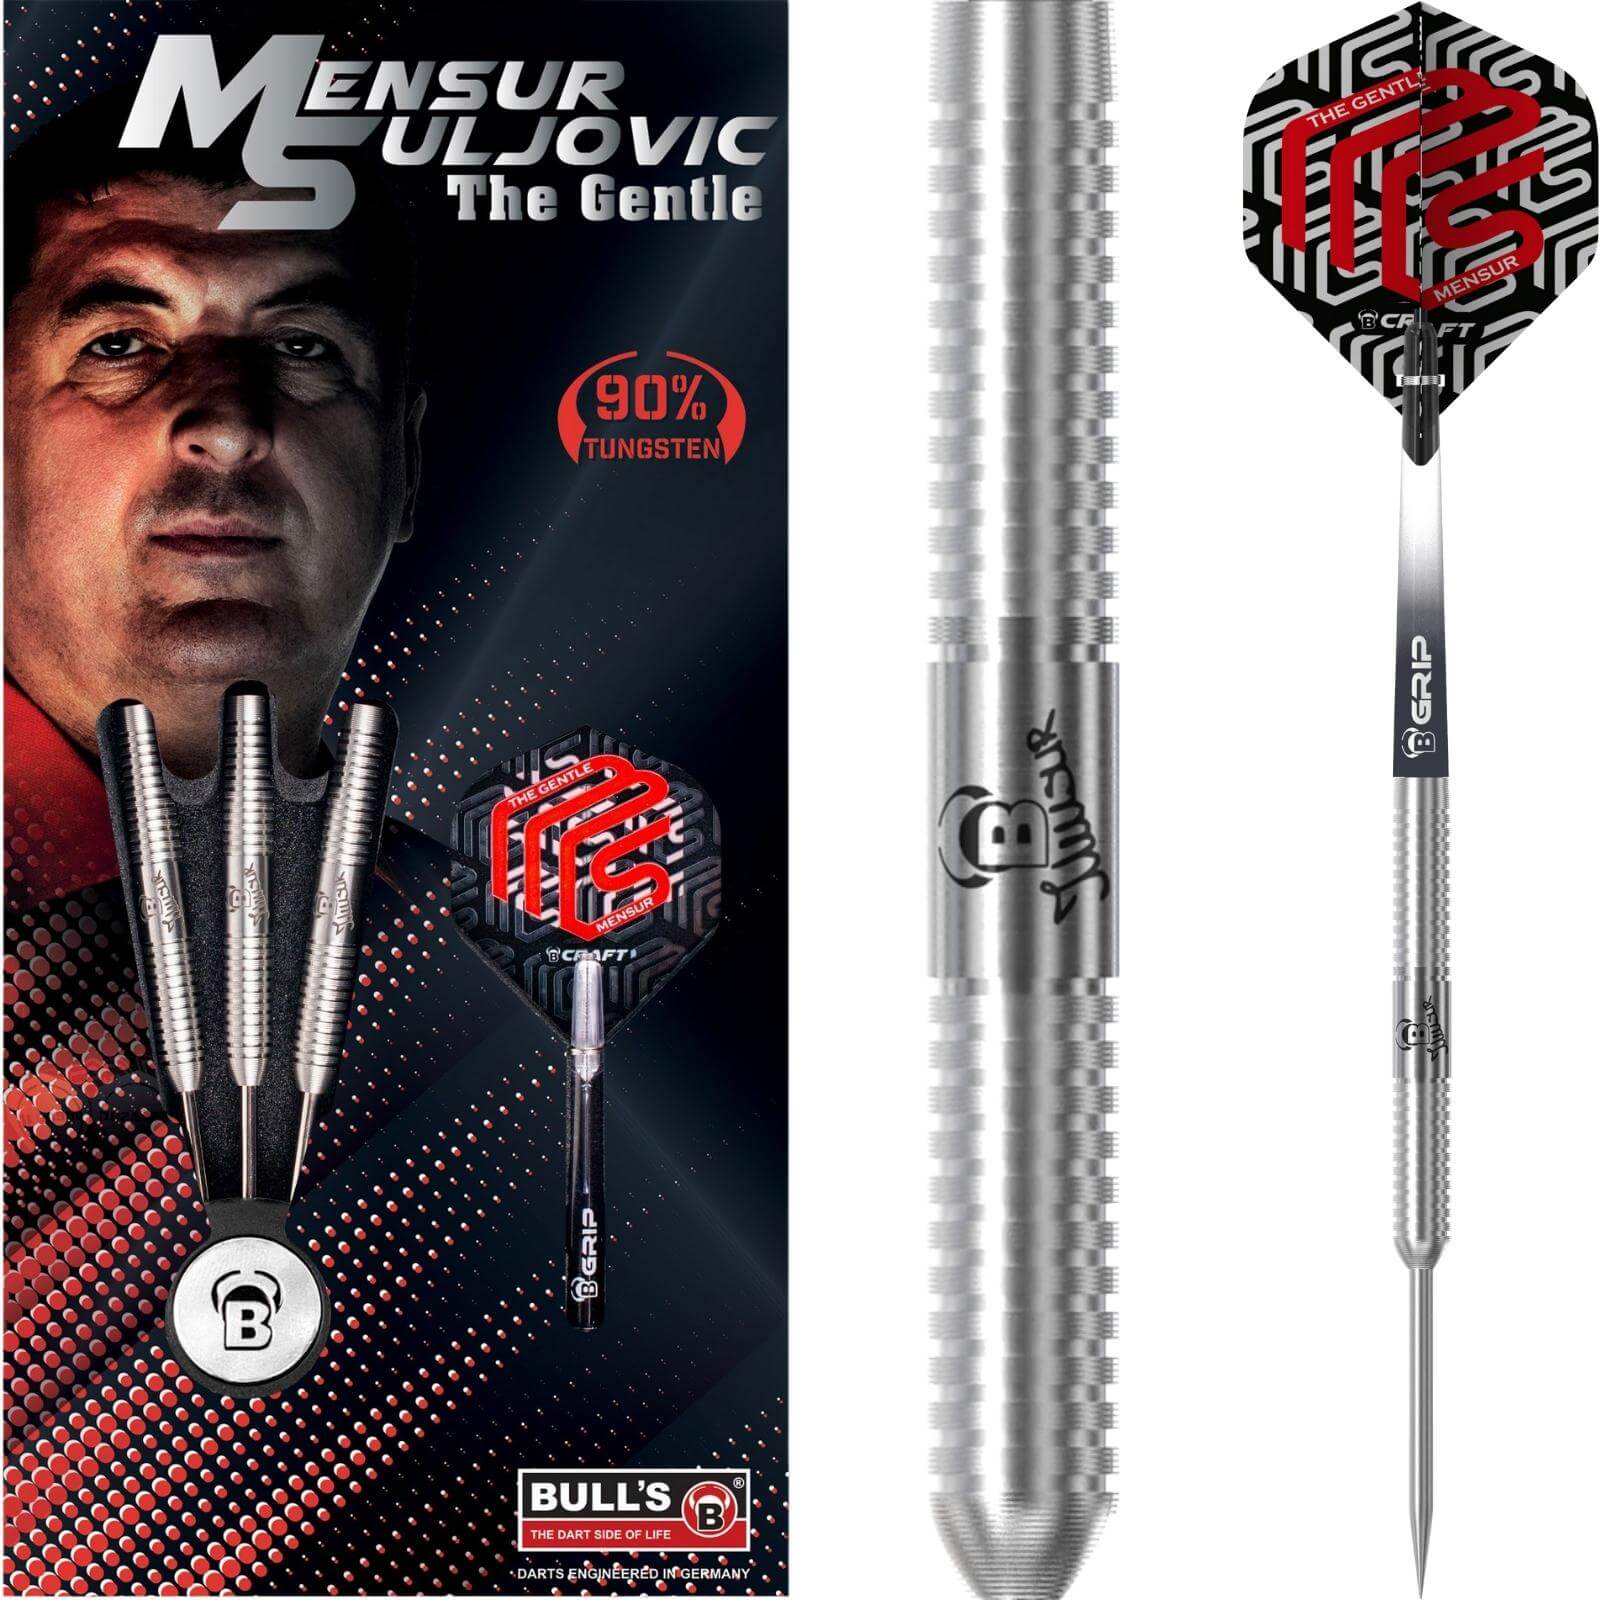 Darts - BULL'S - Mensur Suljovic Original Darts - Steel Tip - 90% Tungsten - 21g 23g 25g 